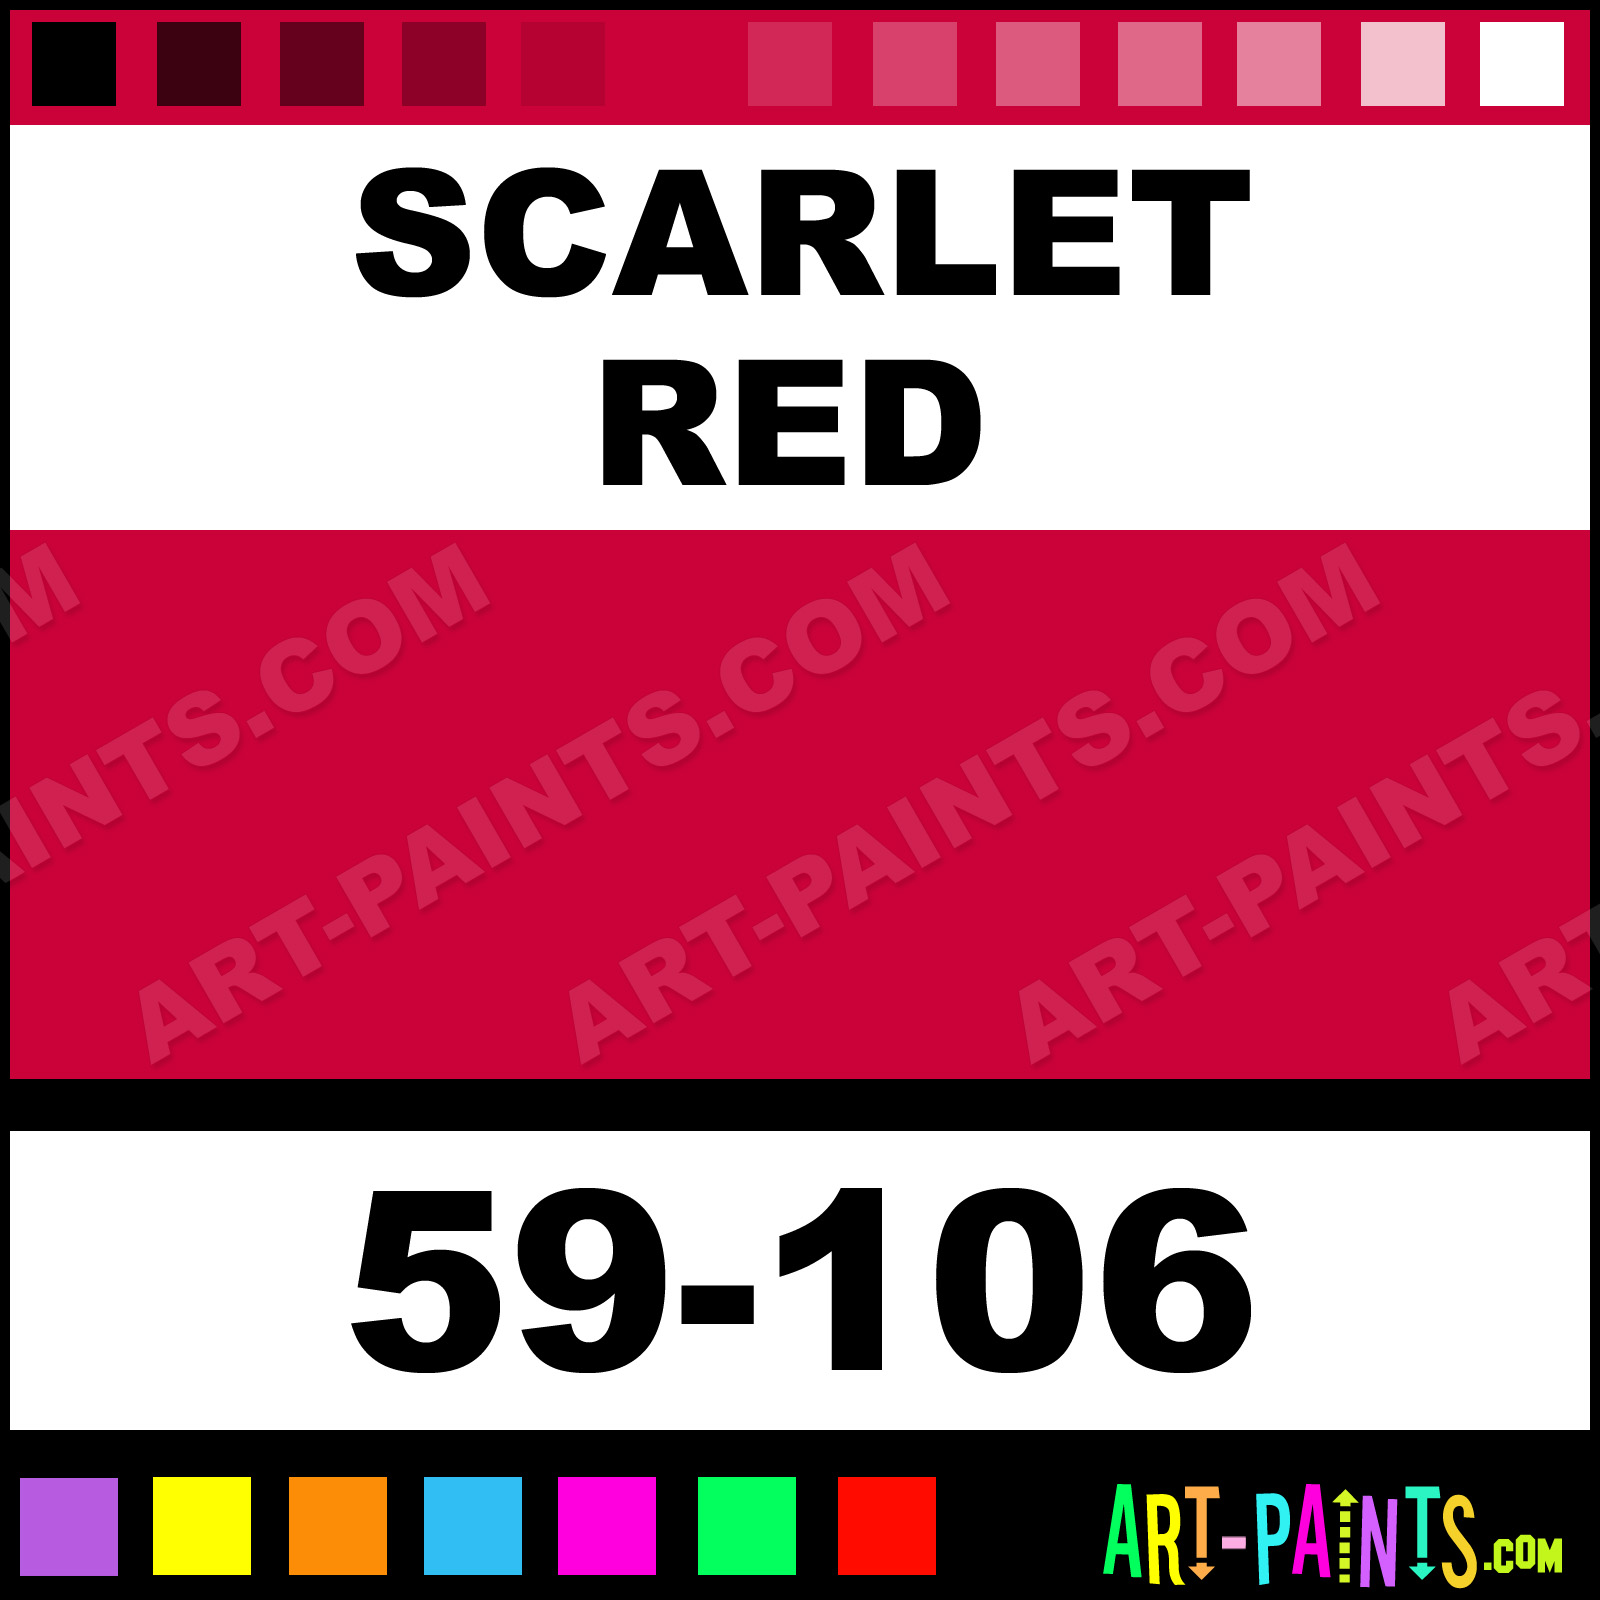 Scarlet Red 59000 Ink Paints - 59-106 - Scarlet Red Paint, Scarlet Red Color, Naz-Dar 59000 Series Ink Paint, CA0138 - Art-Paints.com